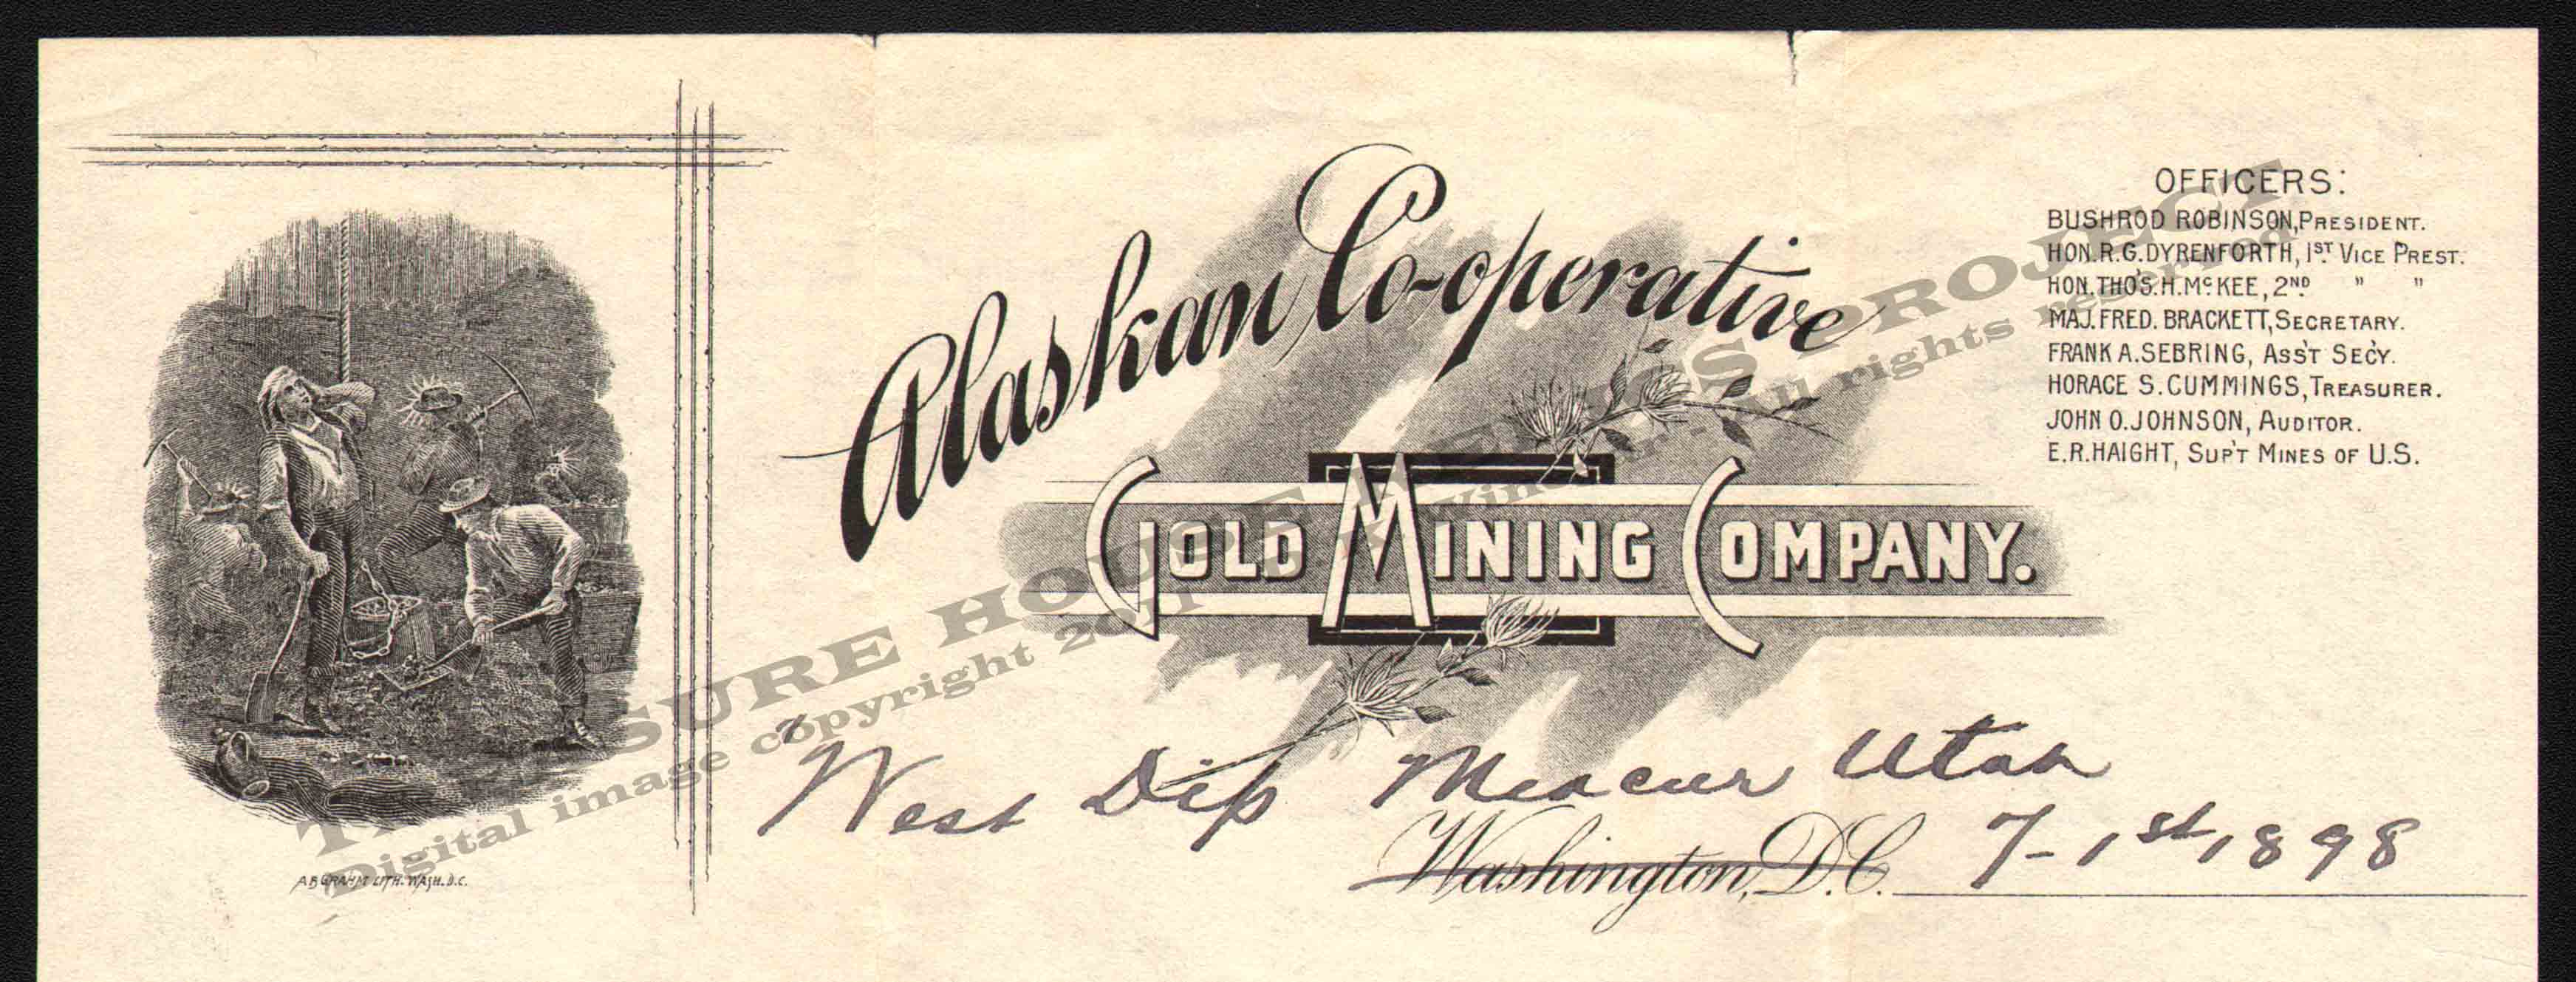 LETTERHEAD_-_ALASKAN_COOPERATIVE_GOLD_MINING_COMPANY_-_1898_-_400_crop_emboss.jpg